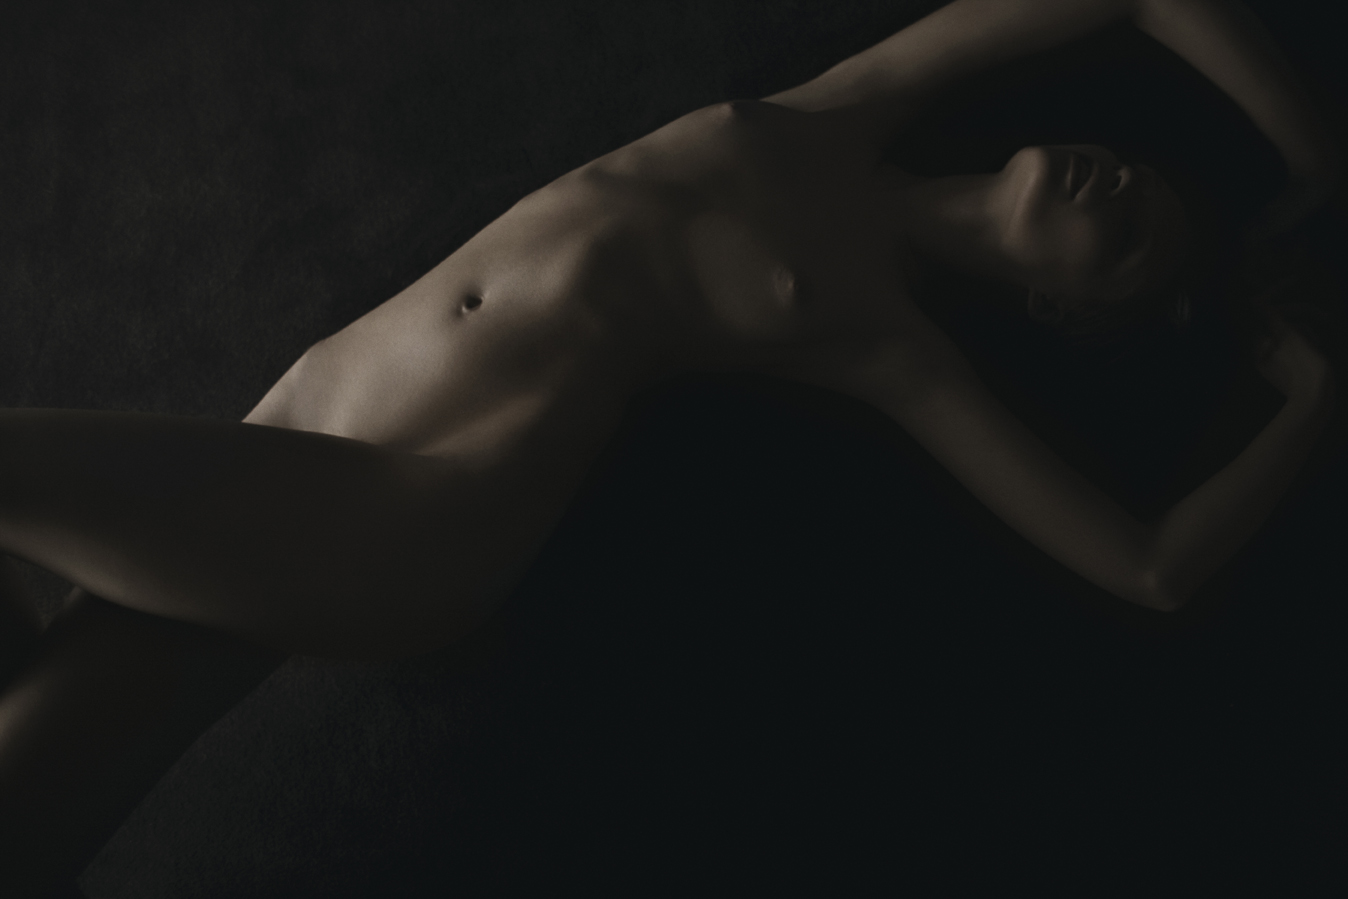 Tiiu Kiuk, nude photoshoot for Dansk Magazine